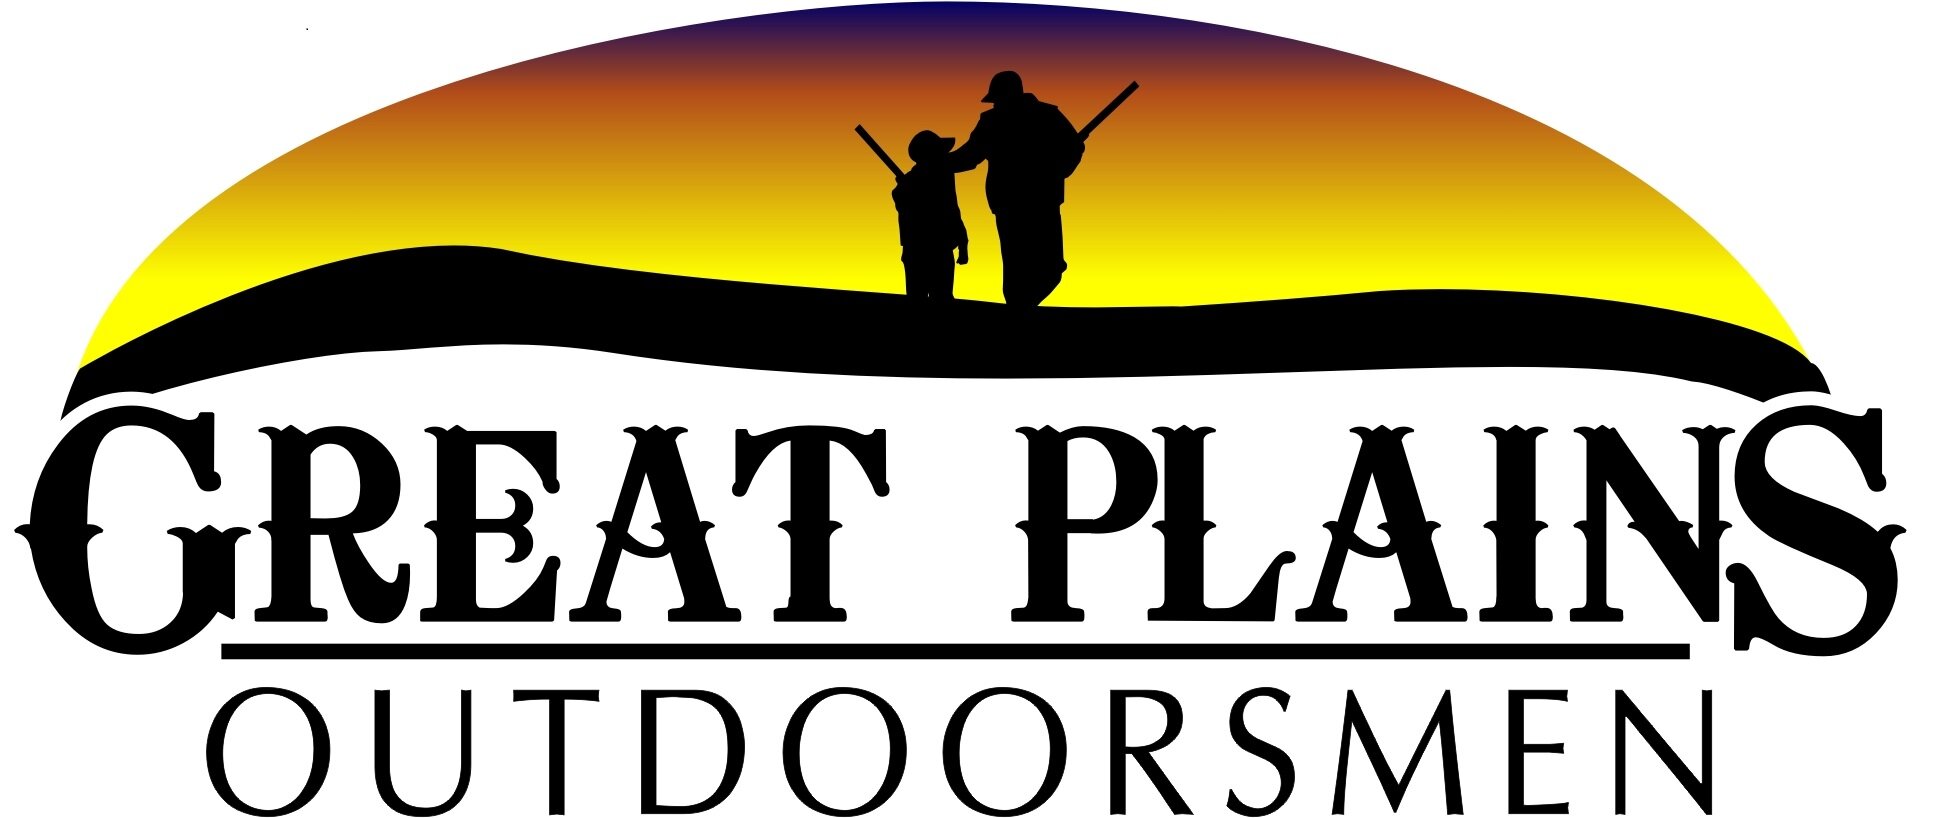 Great Plains Outdoorsmen Logo.jpg